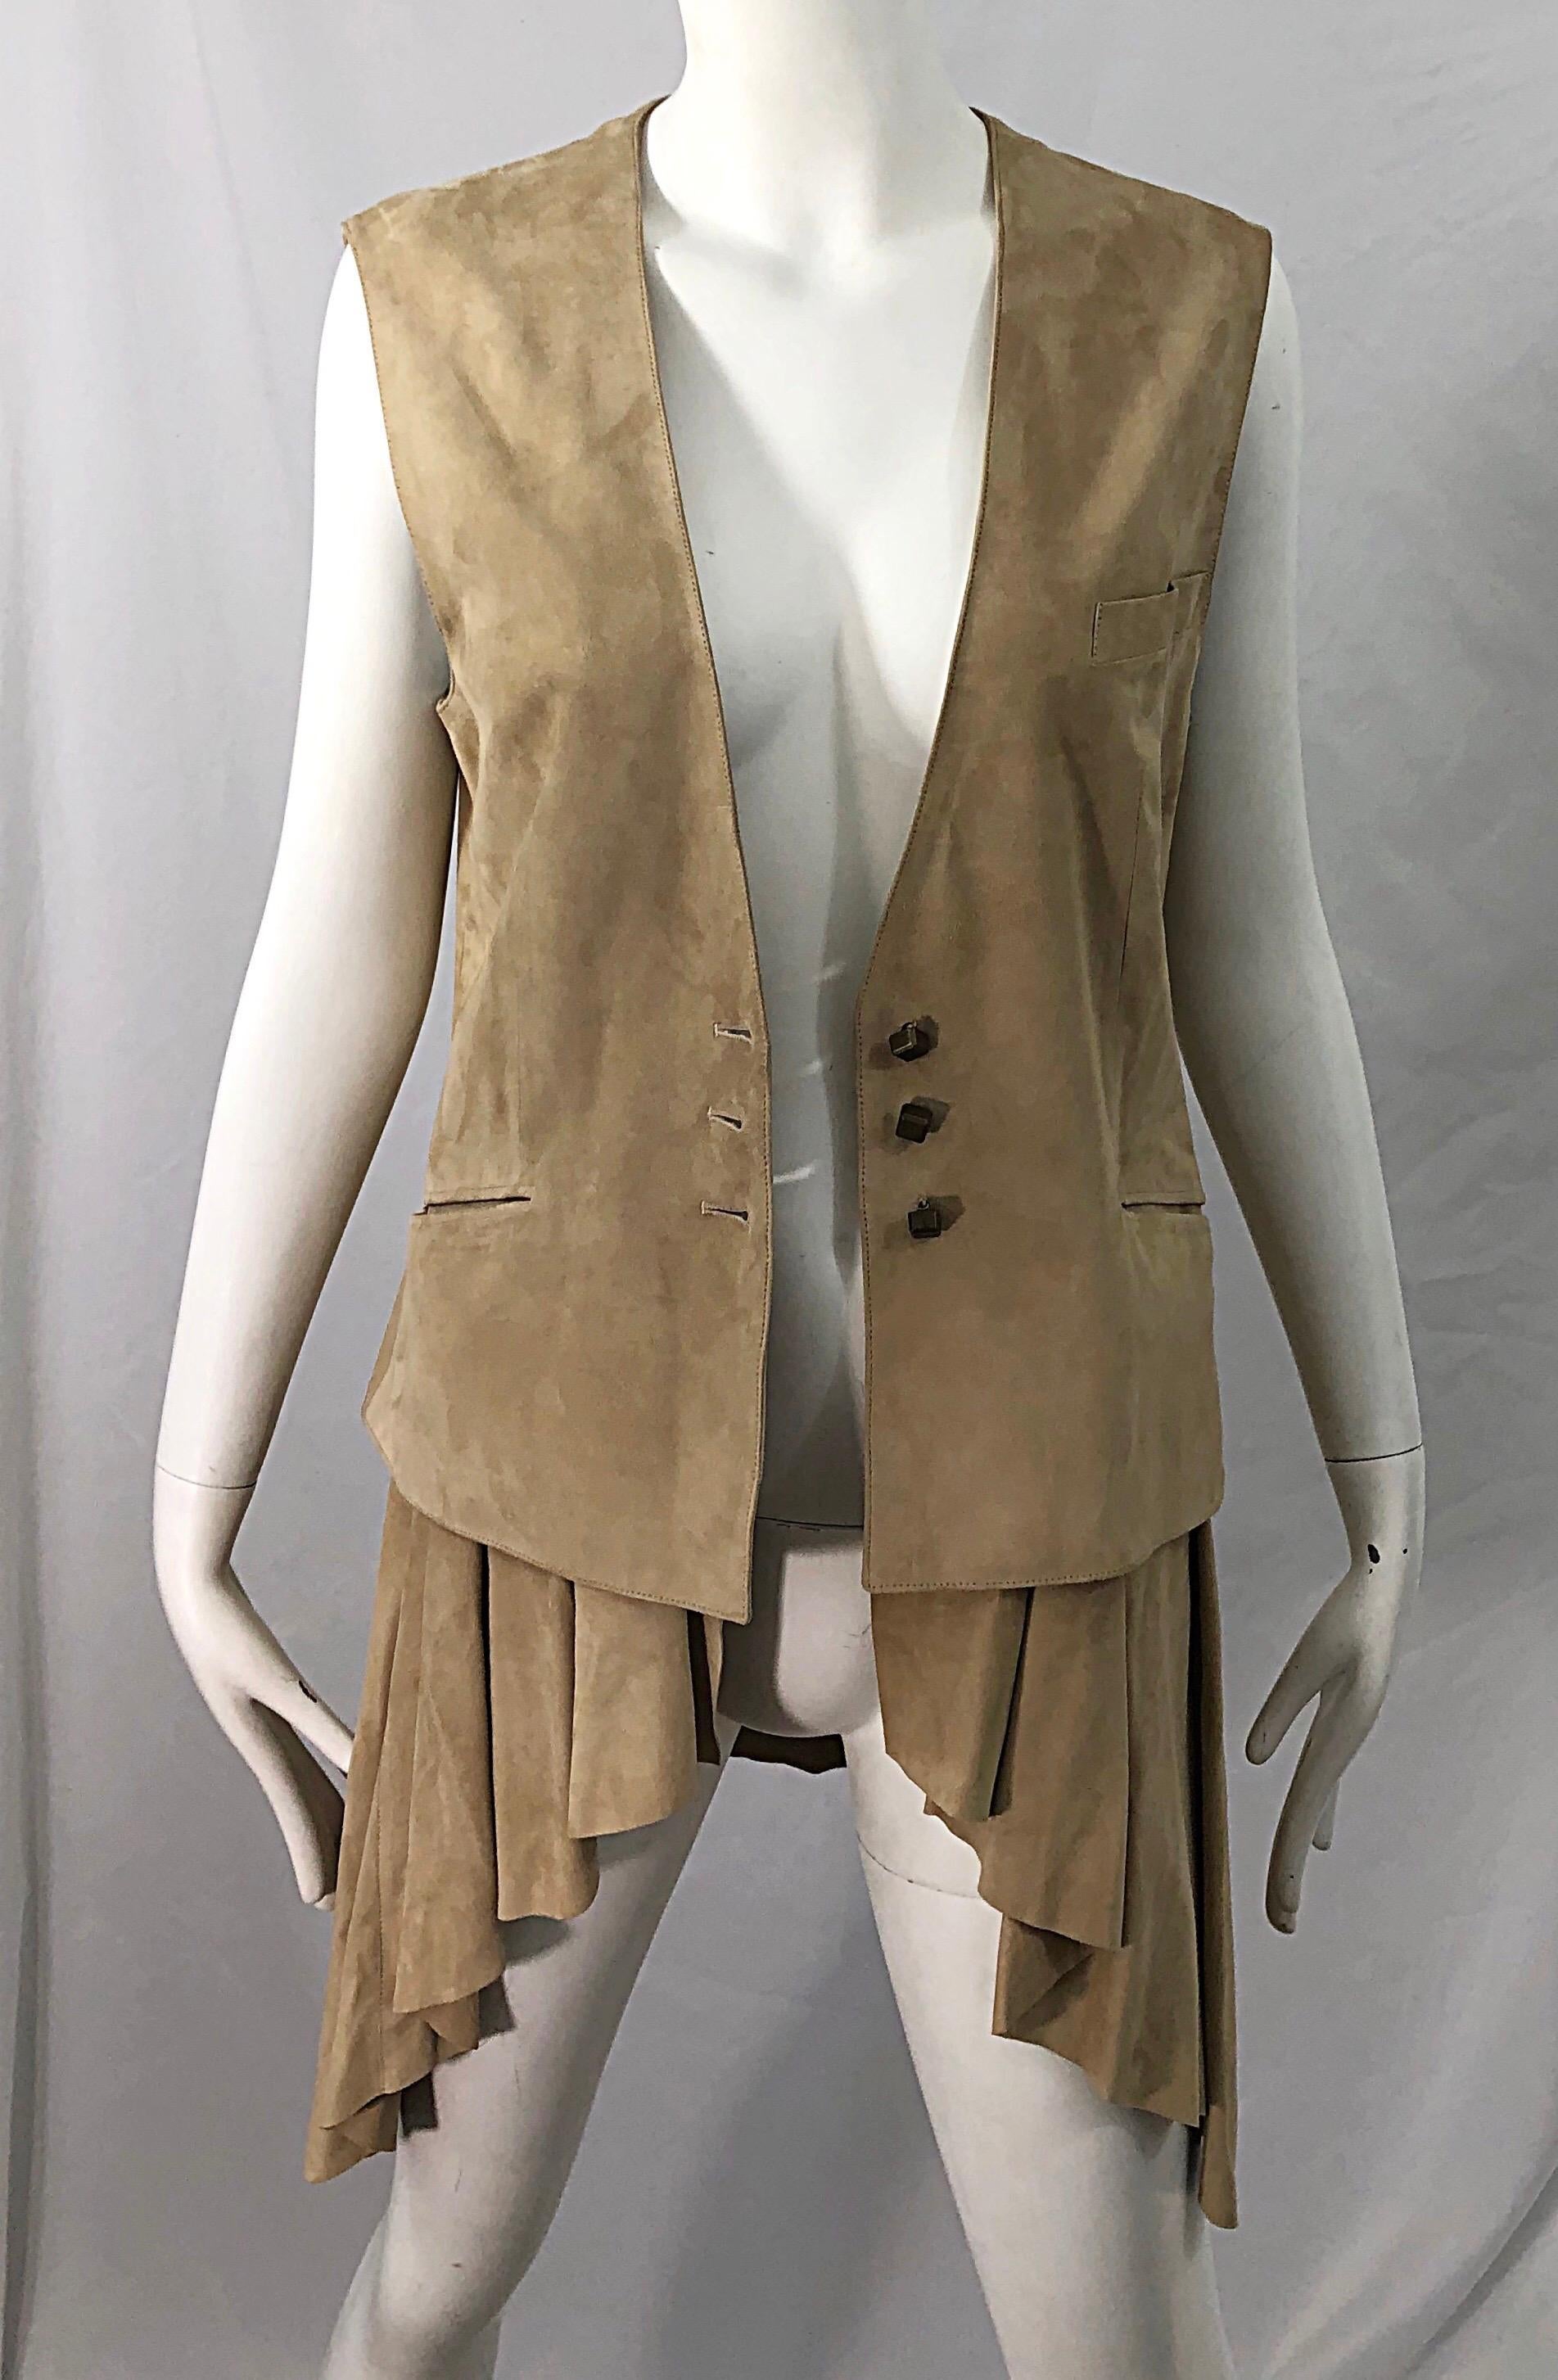 Women's Emanuel Ungaro 1990s Tan Suede Leather Size 42 / 8 Dip Hem Vintage 90s Vest Top For Sale